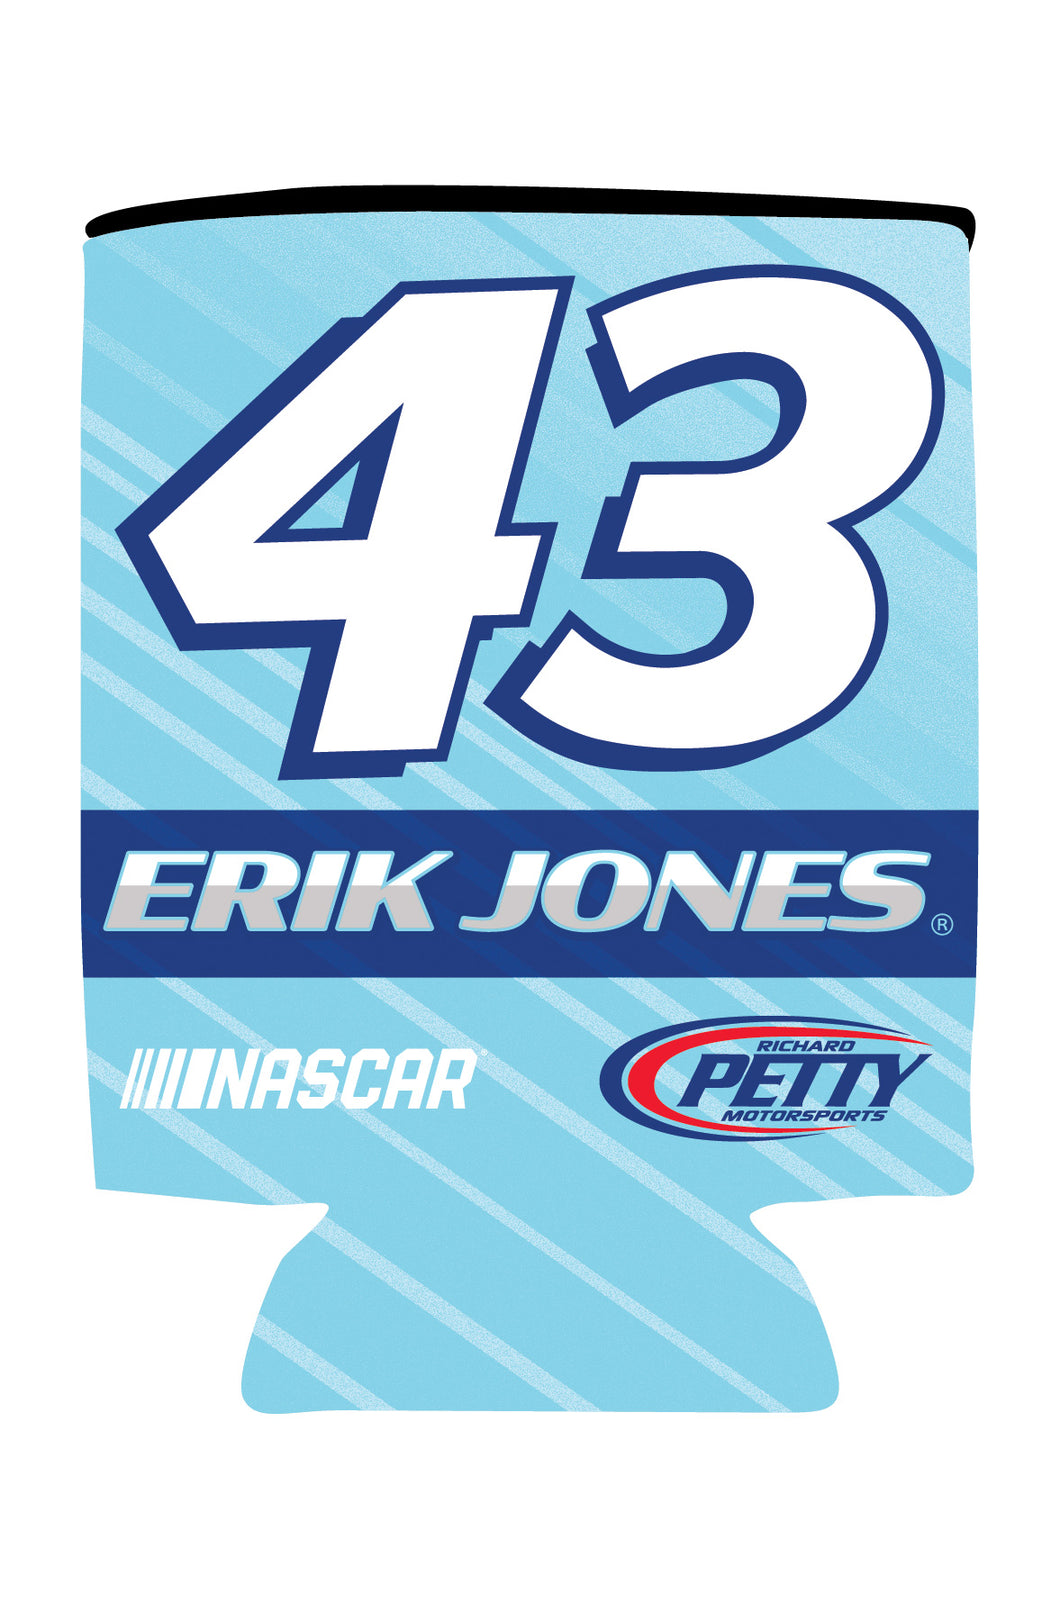 Erik Jones #43 NASCAR Cup Series Can Hugger New for 2021